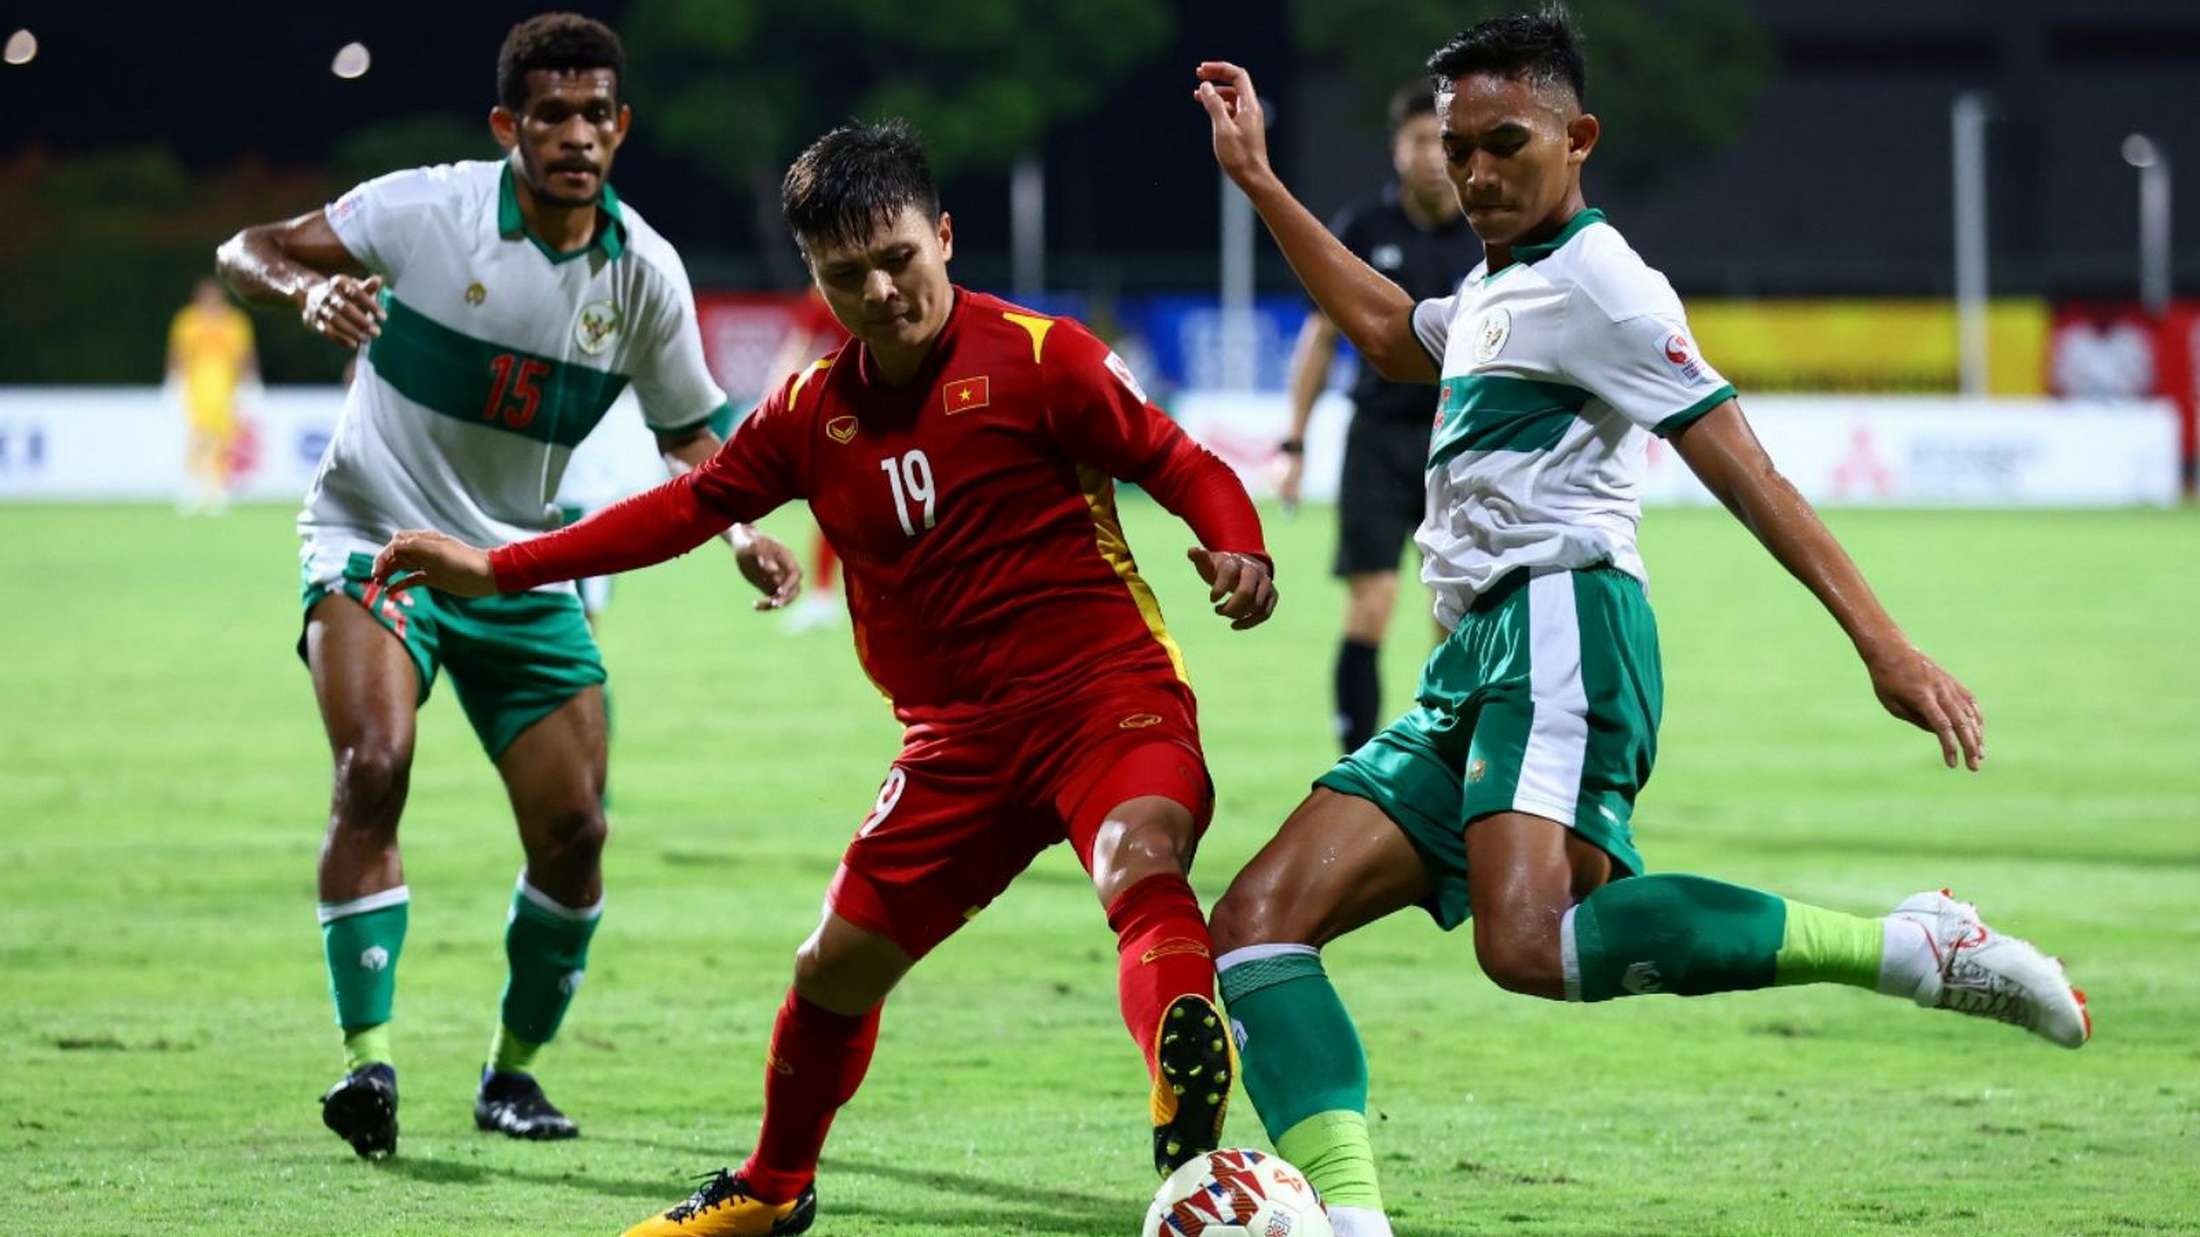 Nguyen Quang Hai Vietnam - Rizki Ridho Ramadhani Indonesia AFF Cup 2020